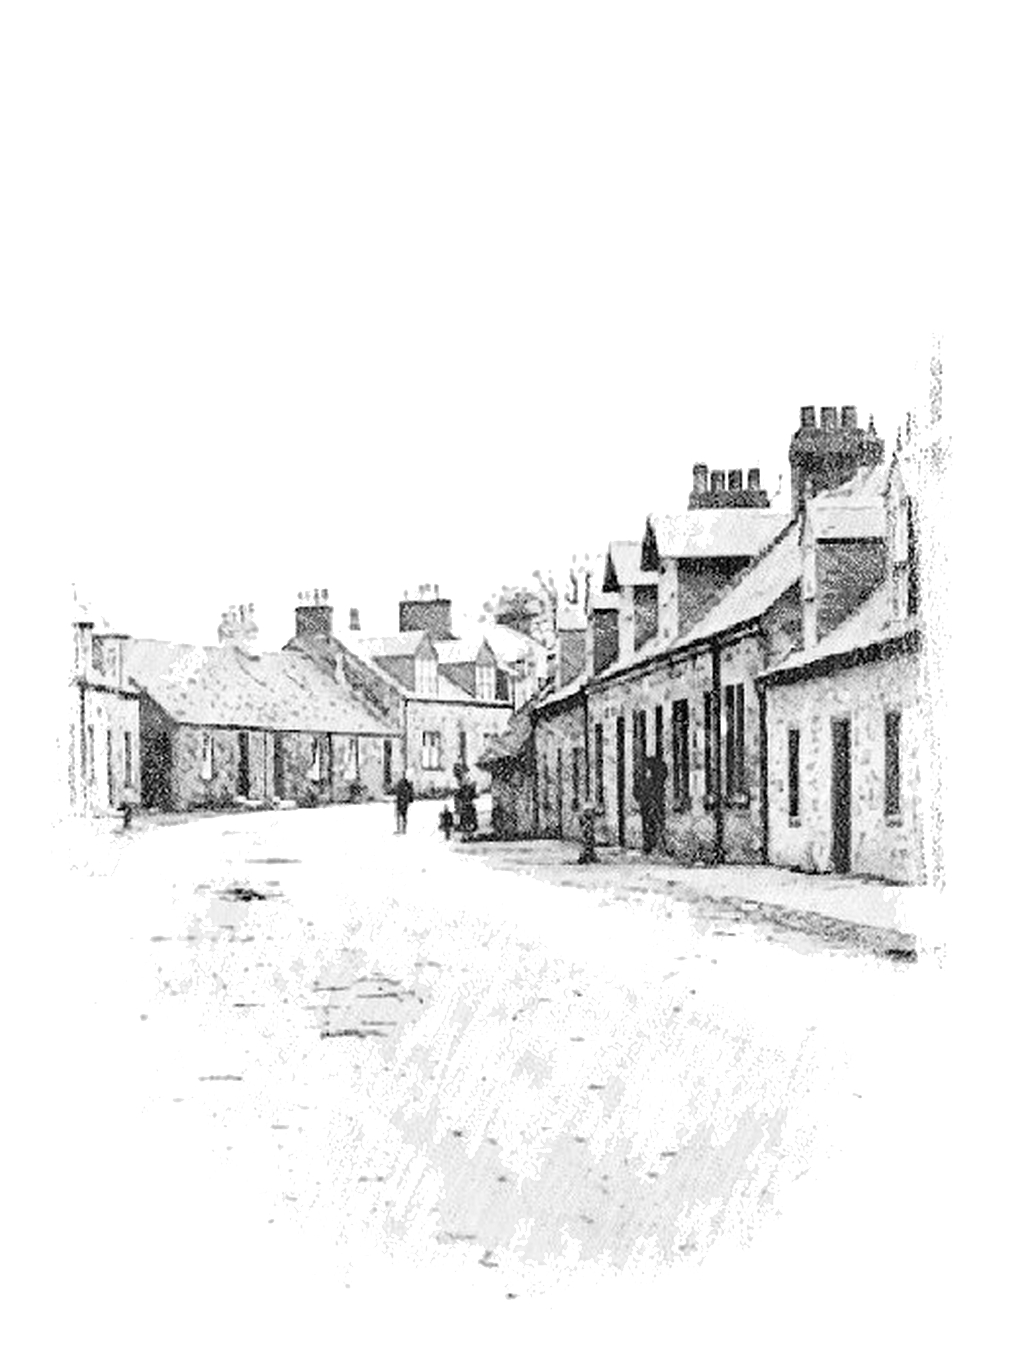 Agnes Broun - Composed by John C Grant (https://johncgrant.com). Traditional composer from Kilmarnock, Ayrshire, Scotland.